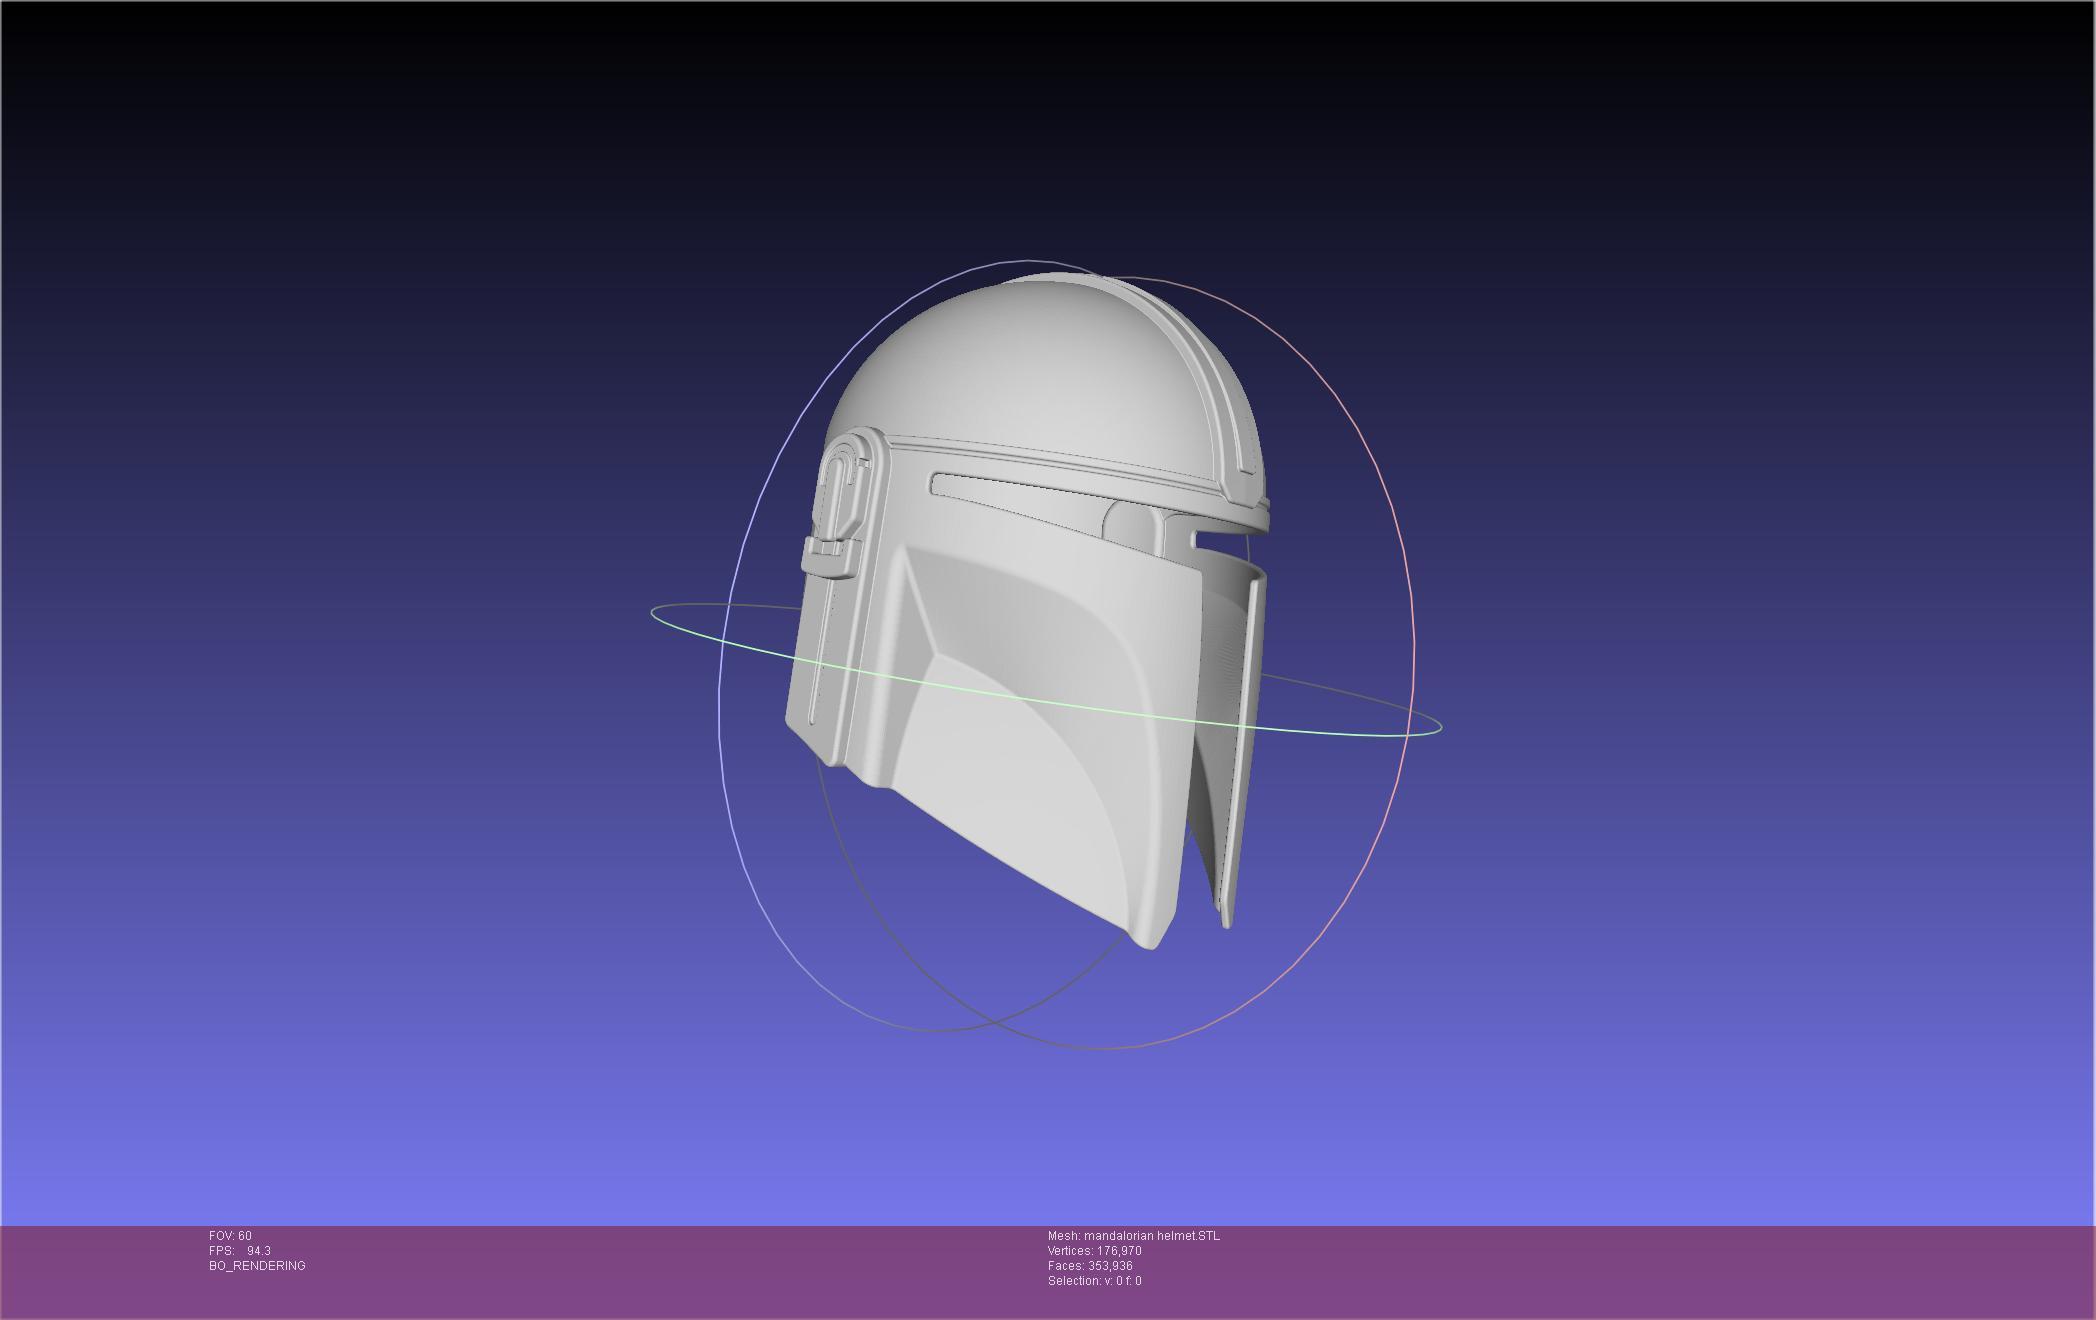 Star Wars Mandalorian Helmet 3d model